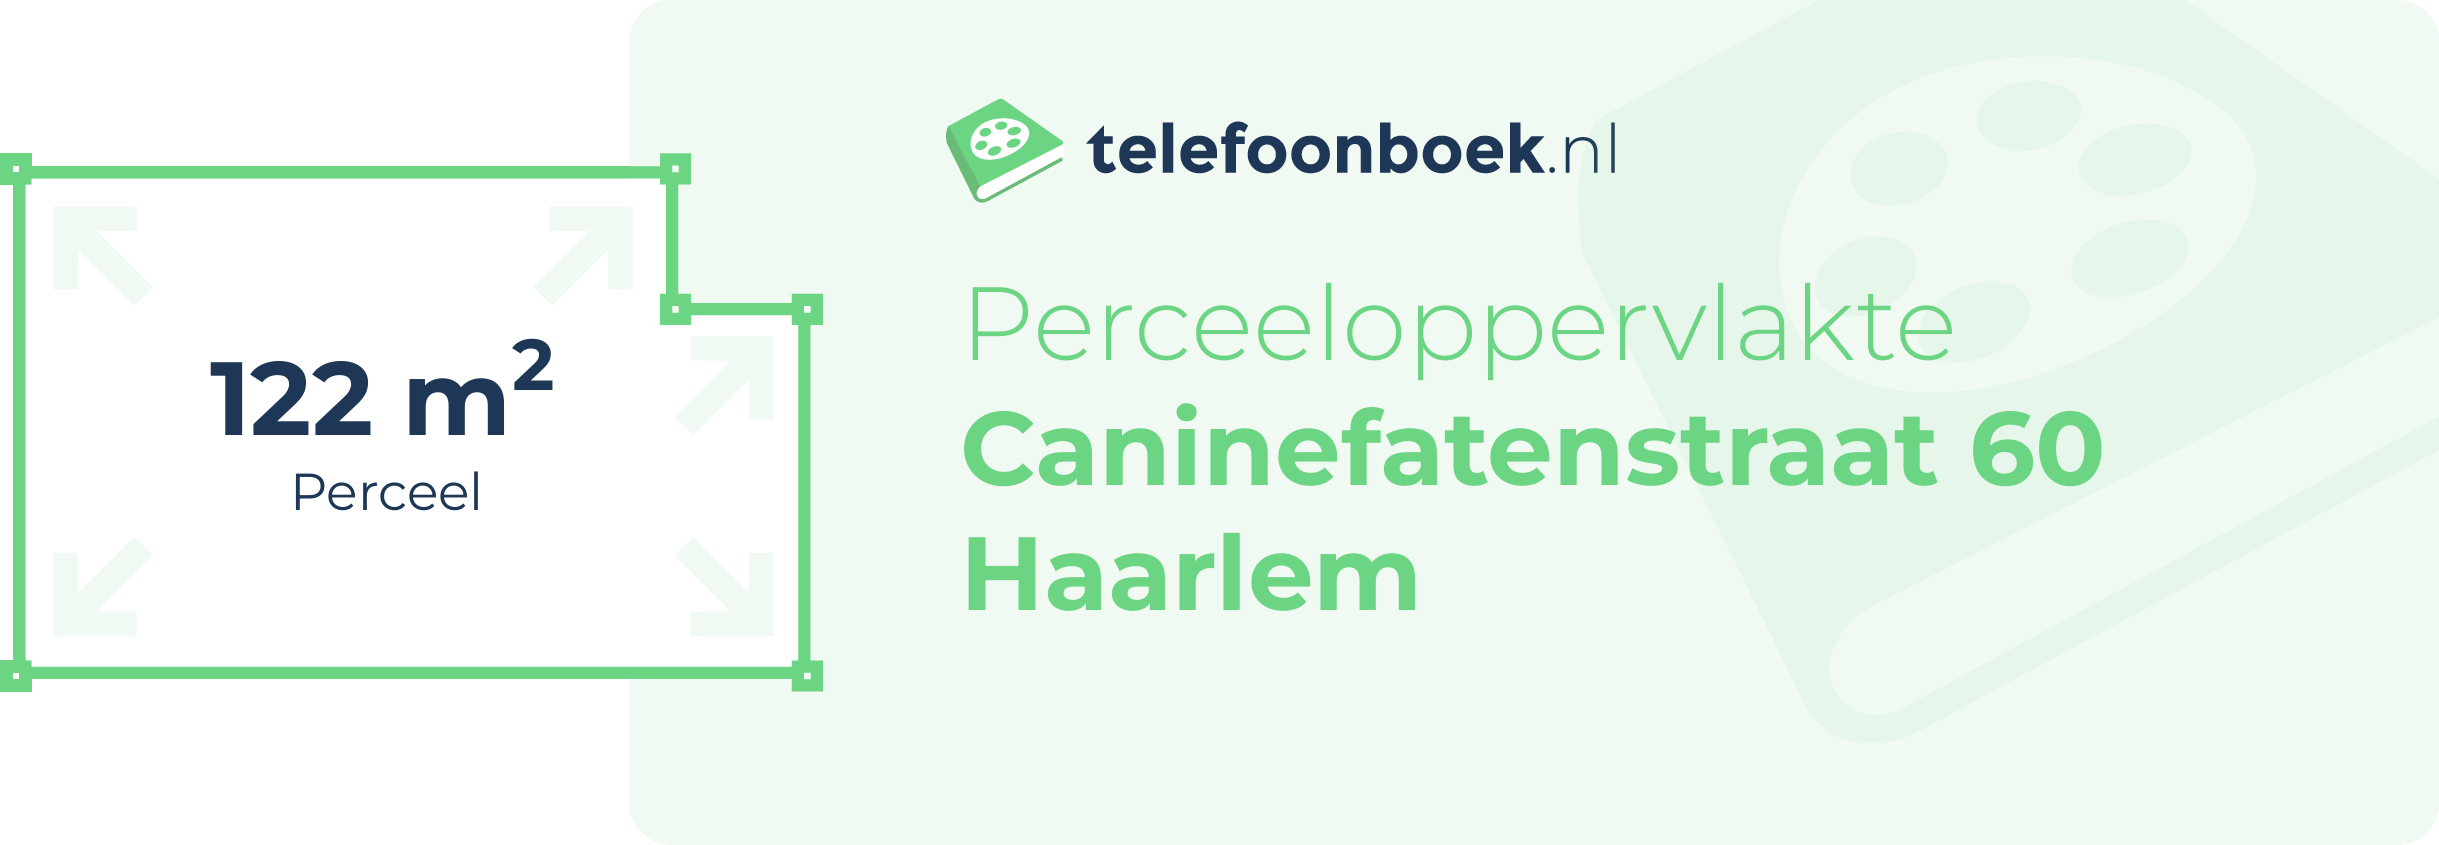 Perceeloppervlakte Caninefatenstraat 60 Haarlem